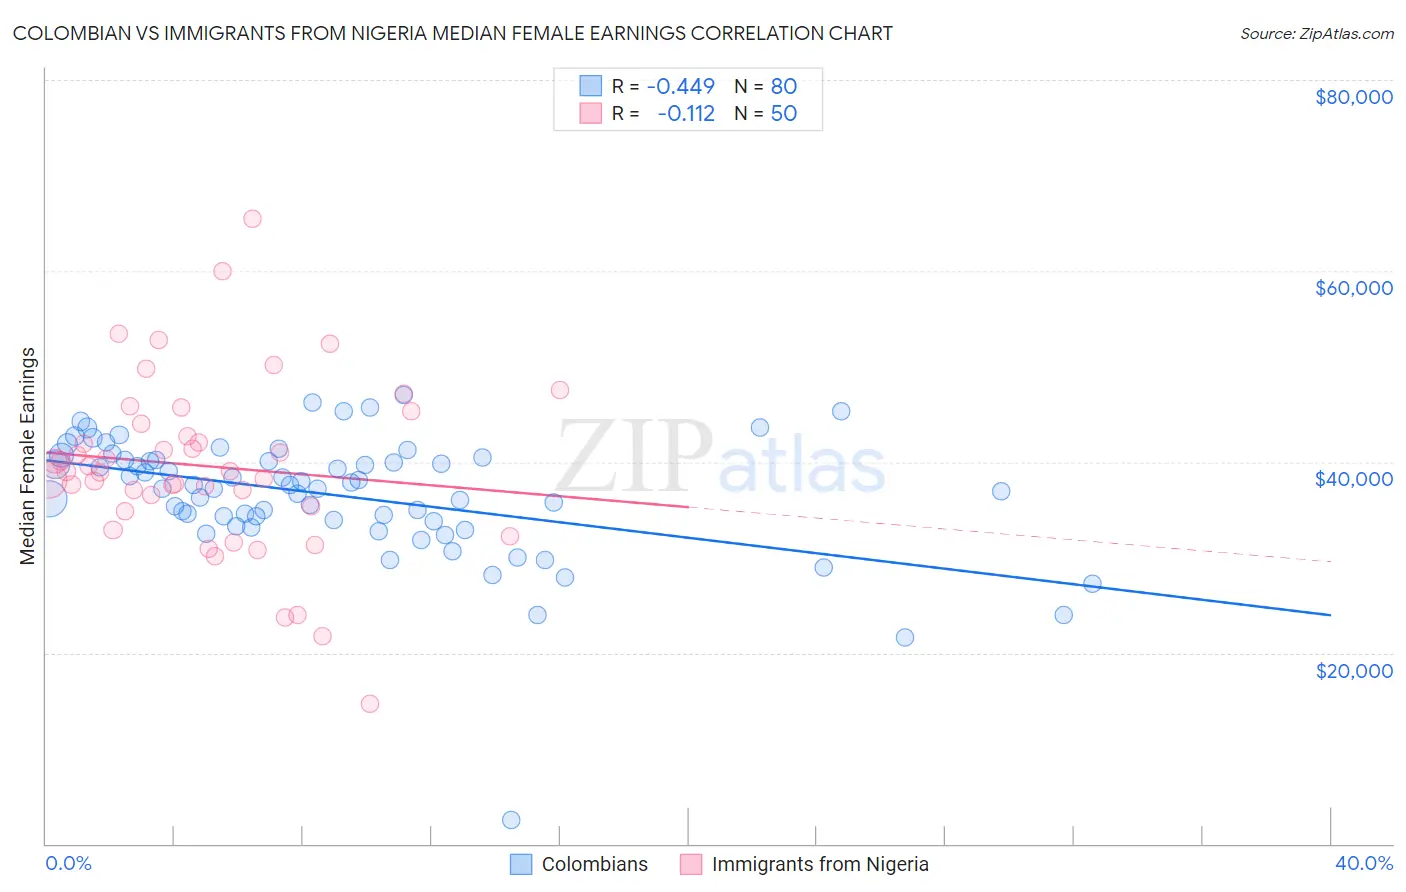 Colombian vs Immigrants from Nigeria Median Female Earnings